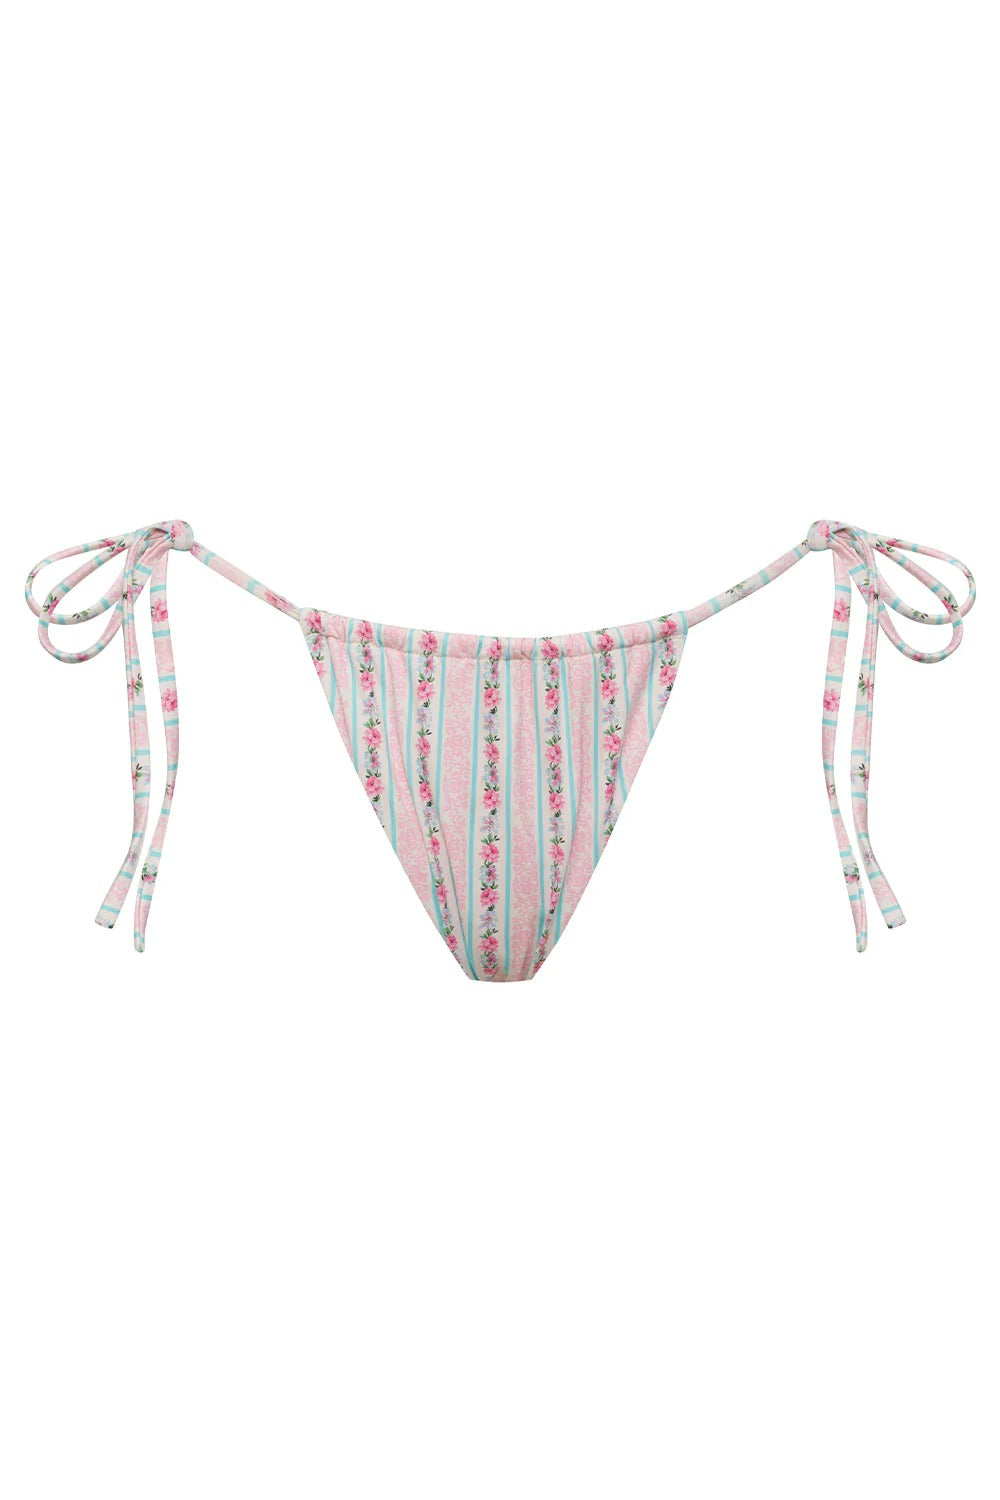 Tia Floral String Bikini Bottom